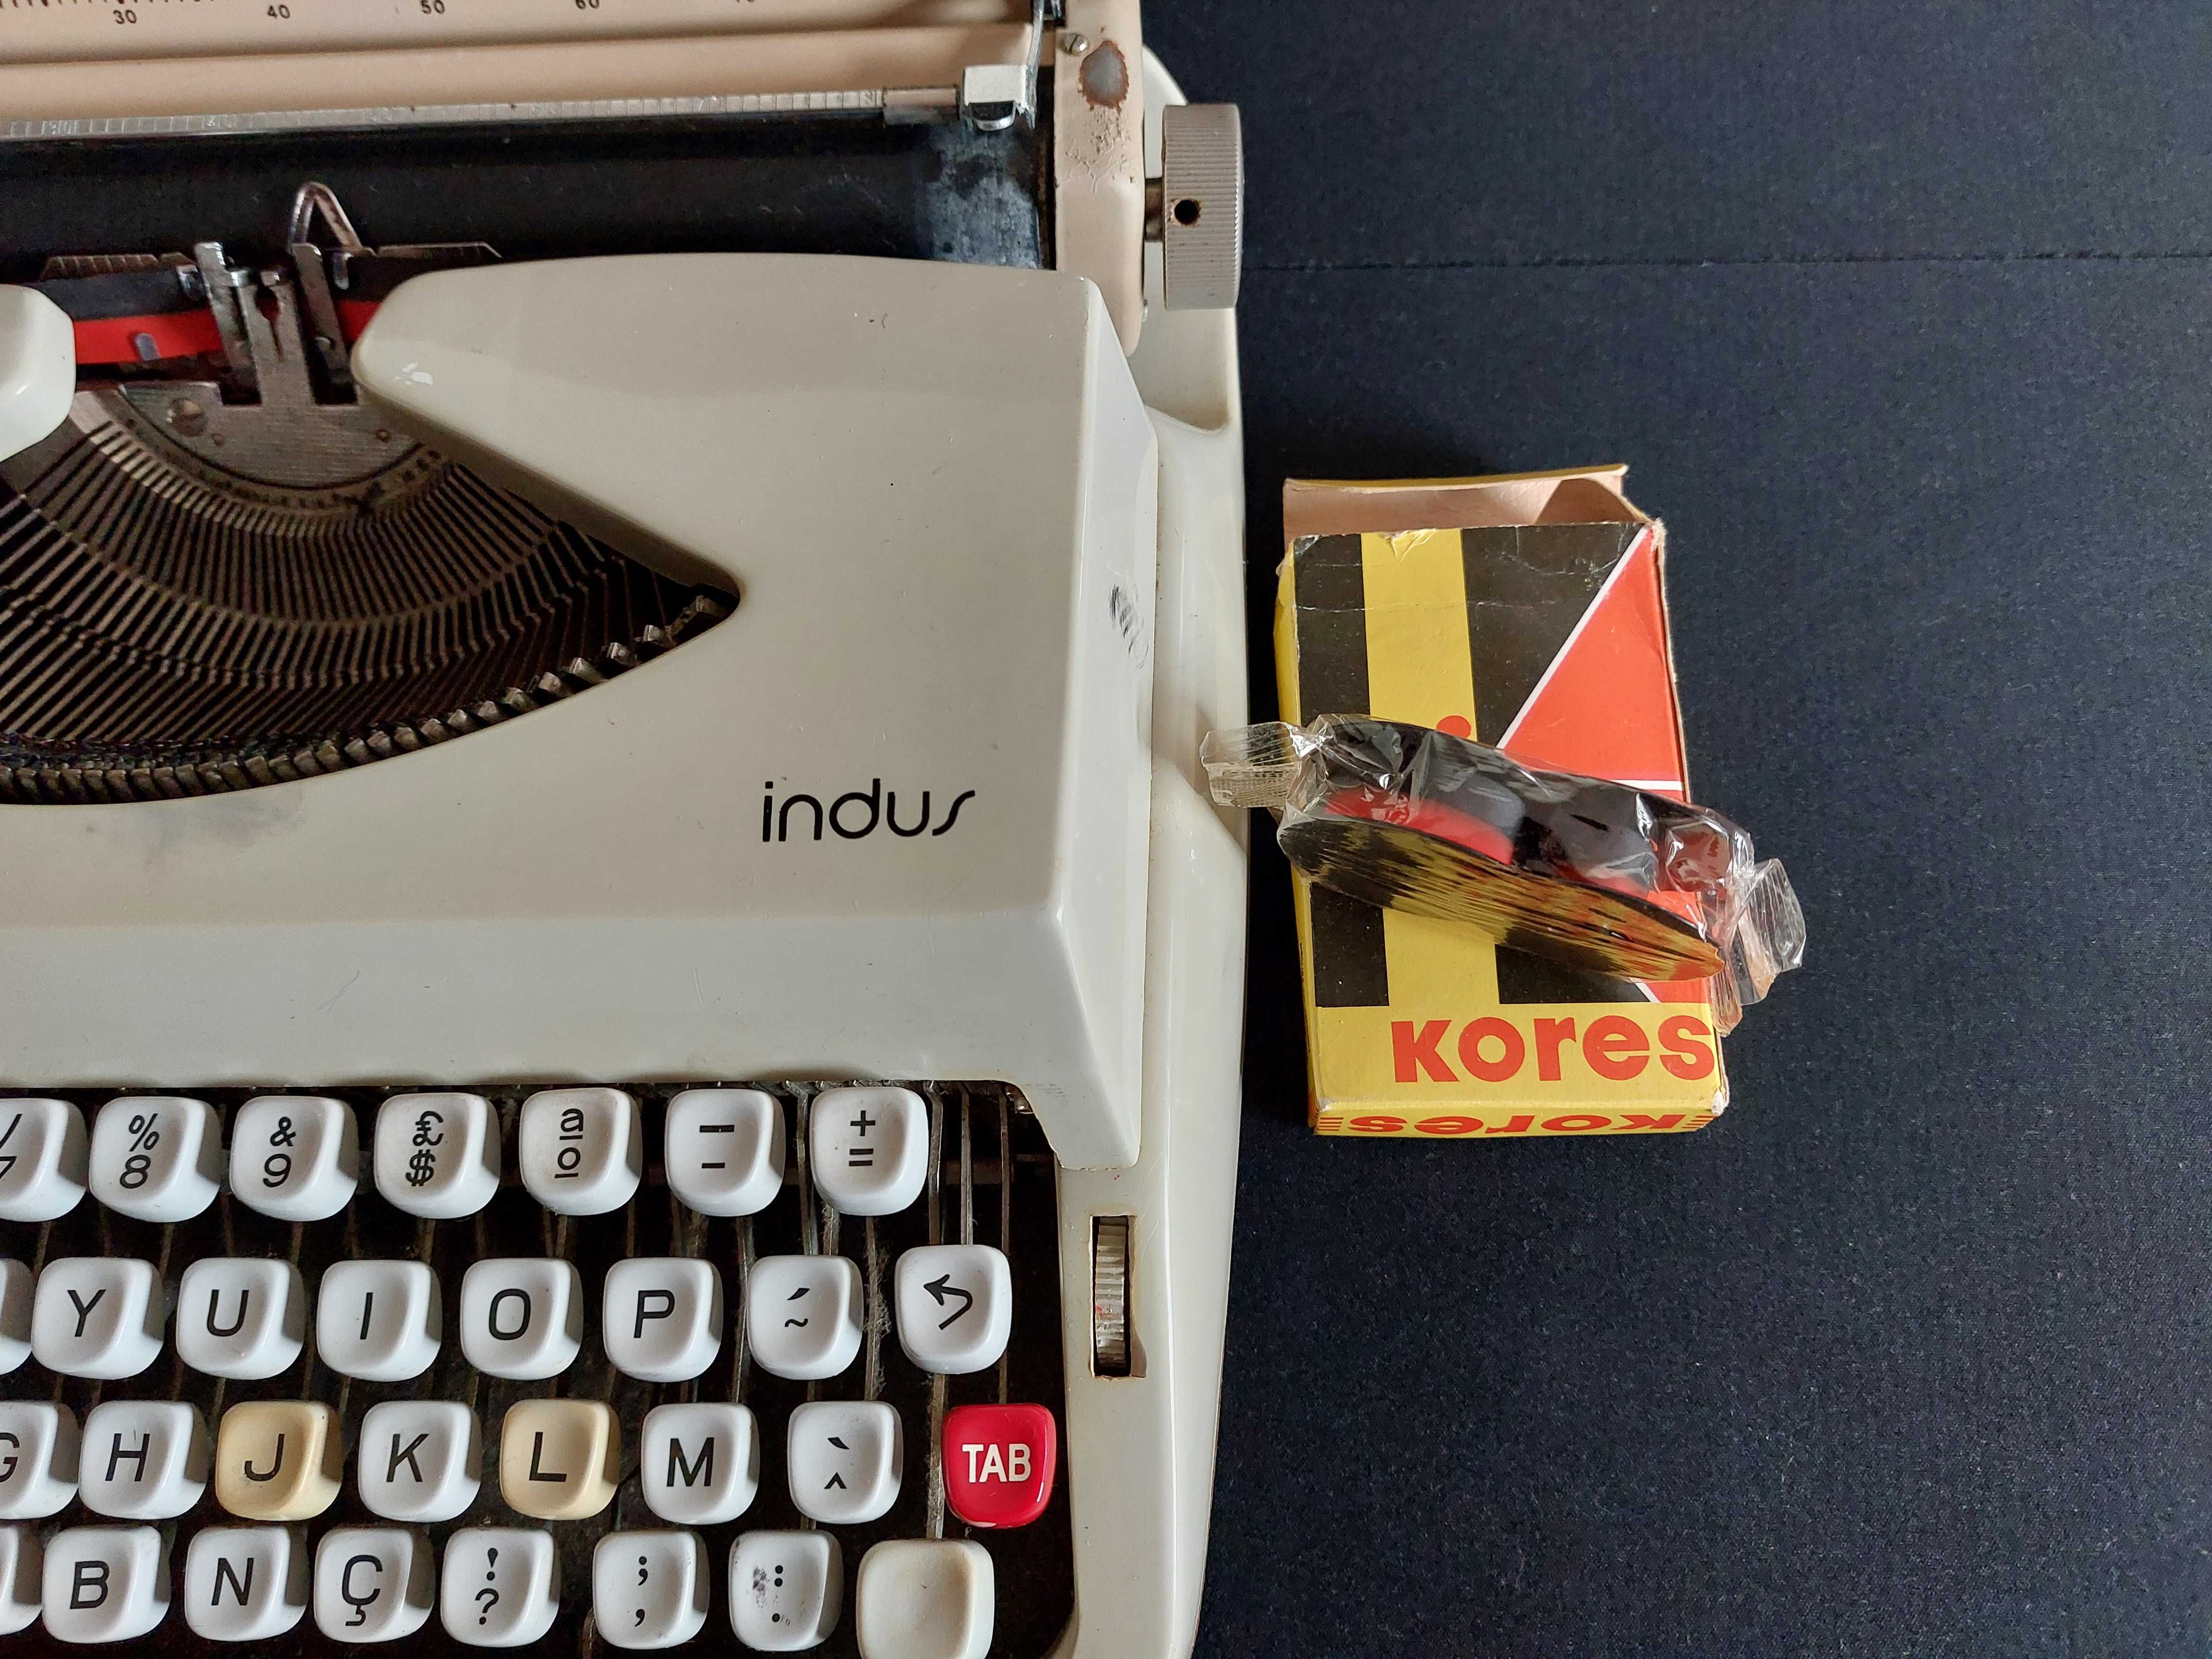 Maquina de Escrever "INDUS"